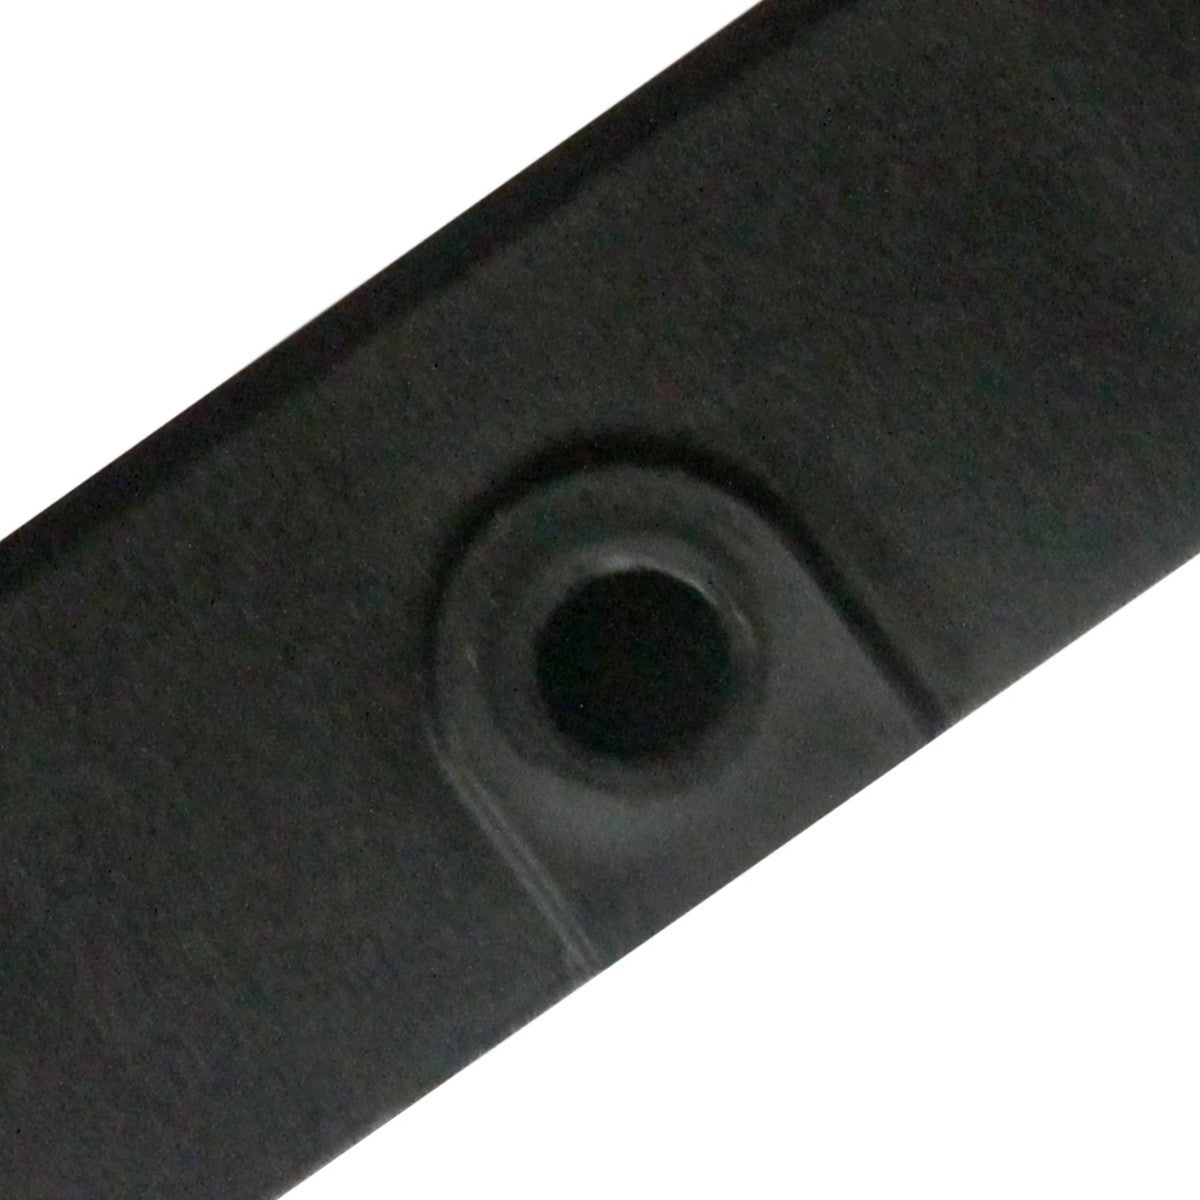 Close-up of blade tip.